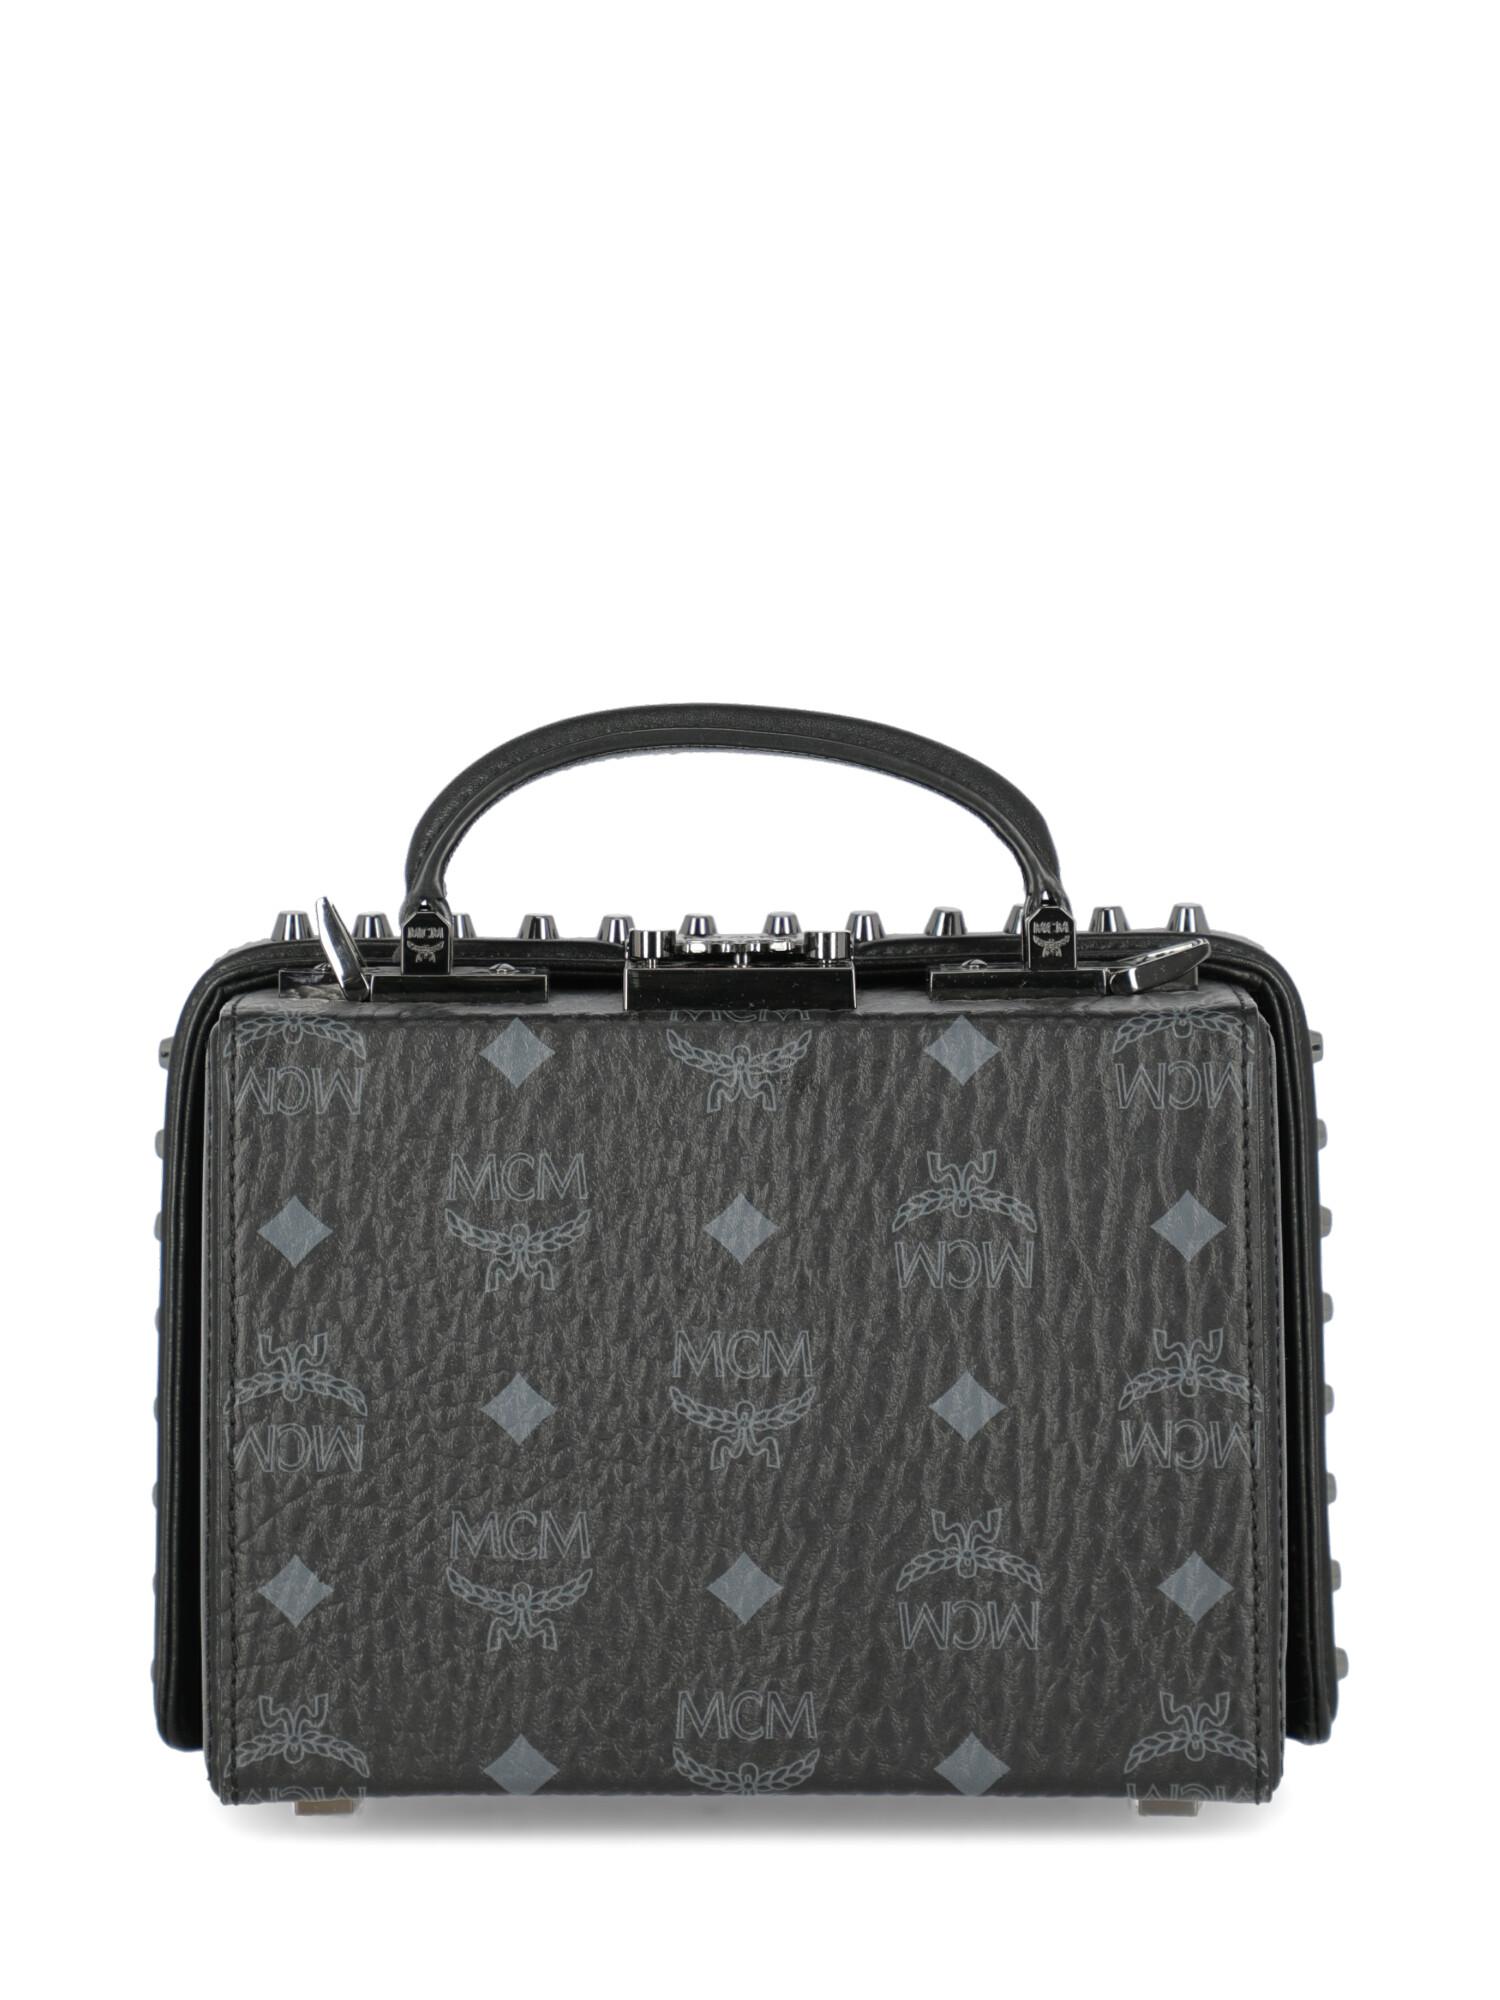 Mcm Woman Handbag Black  In Excellent Condition For Sale In Milan, IT